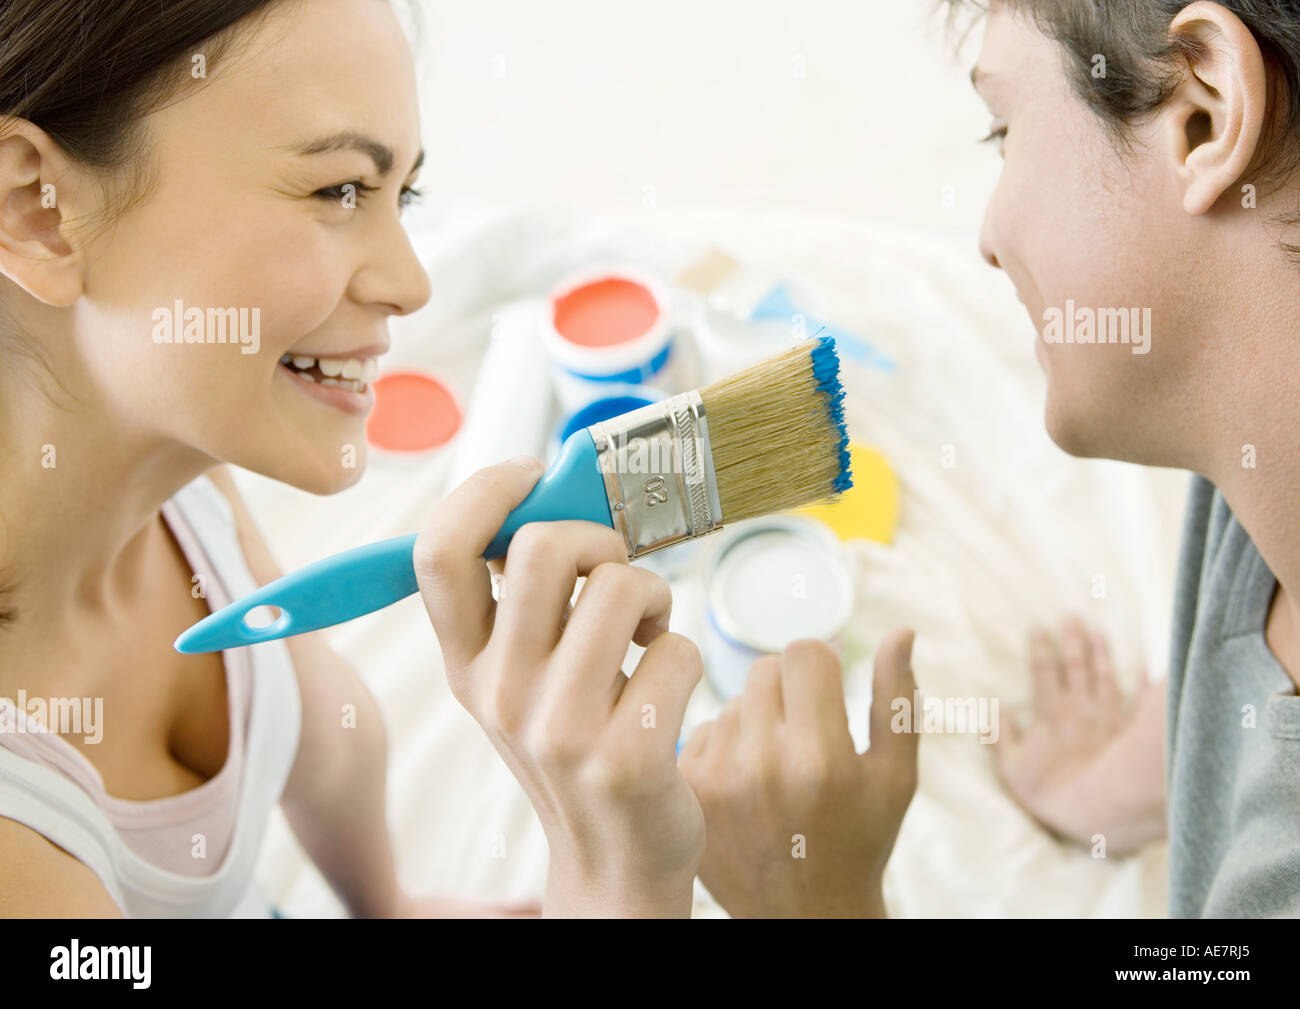 Woman holding up paintbrush toward man's face Stock Photo